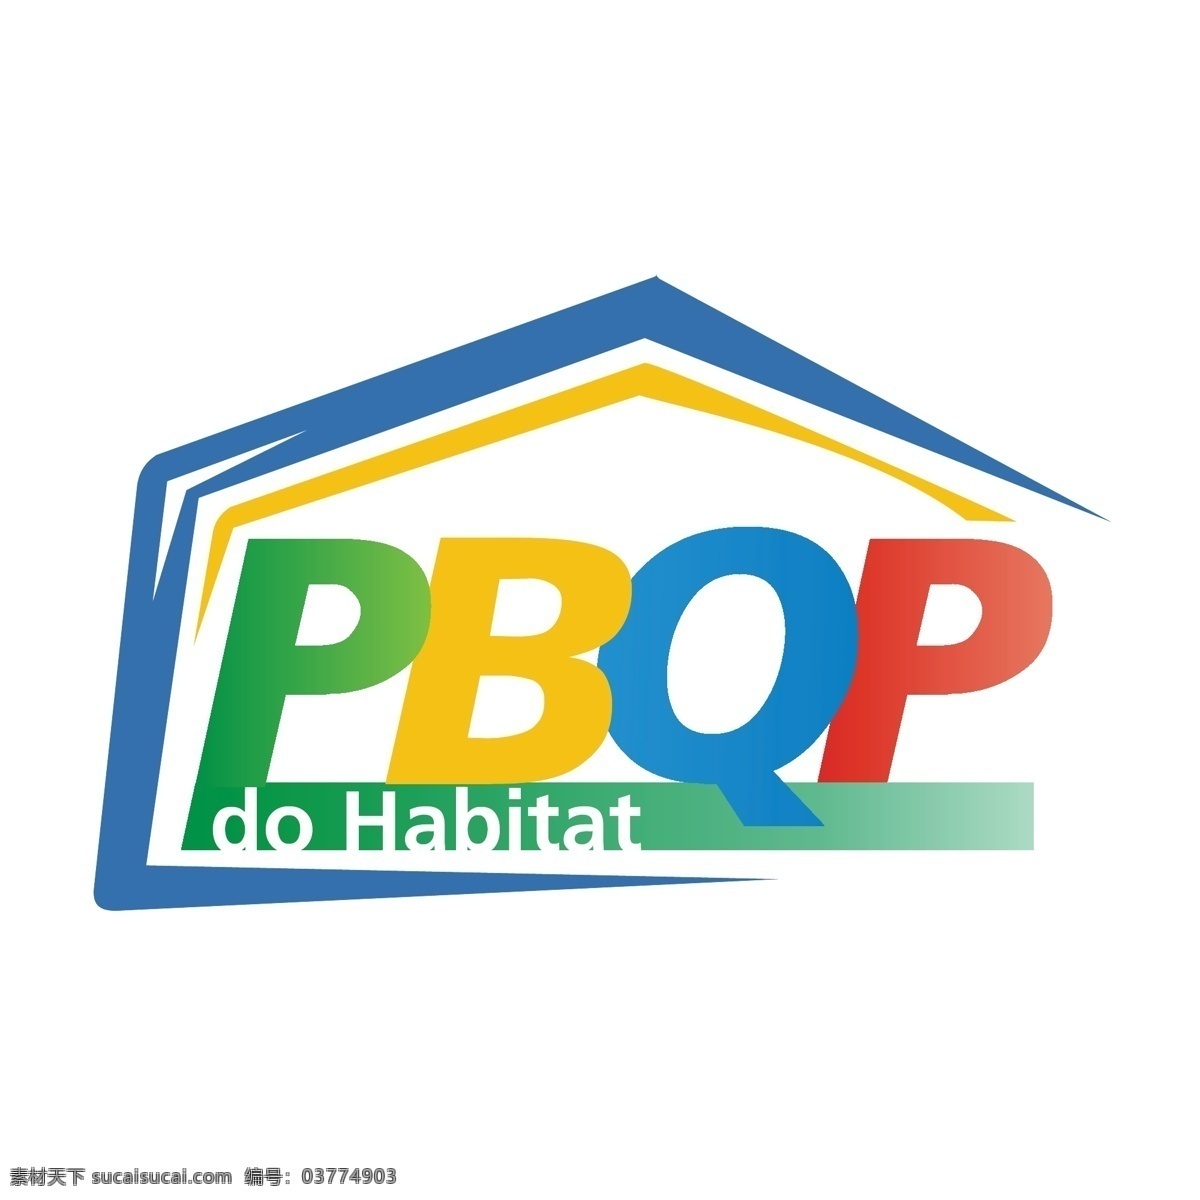 pbqph logo大全 logo 设计欣赏 商业矢量 矢量下载 服务 行业 标志 标志设计 欣赏 网页矢量 矢量图 其他矢量图